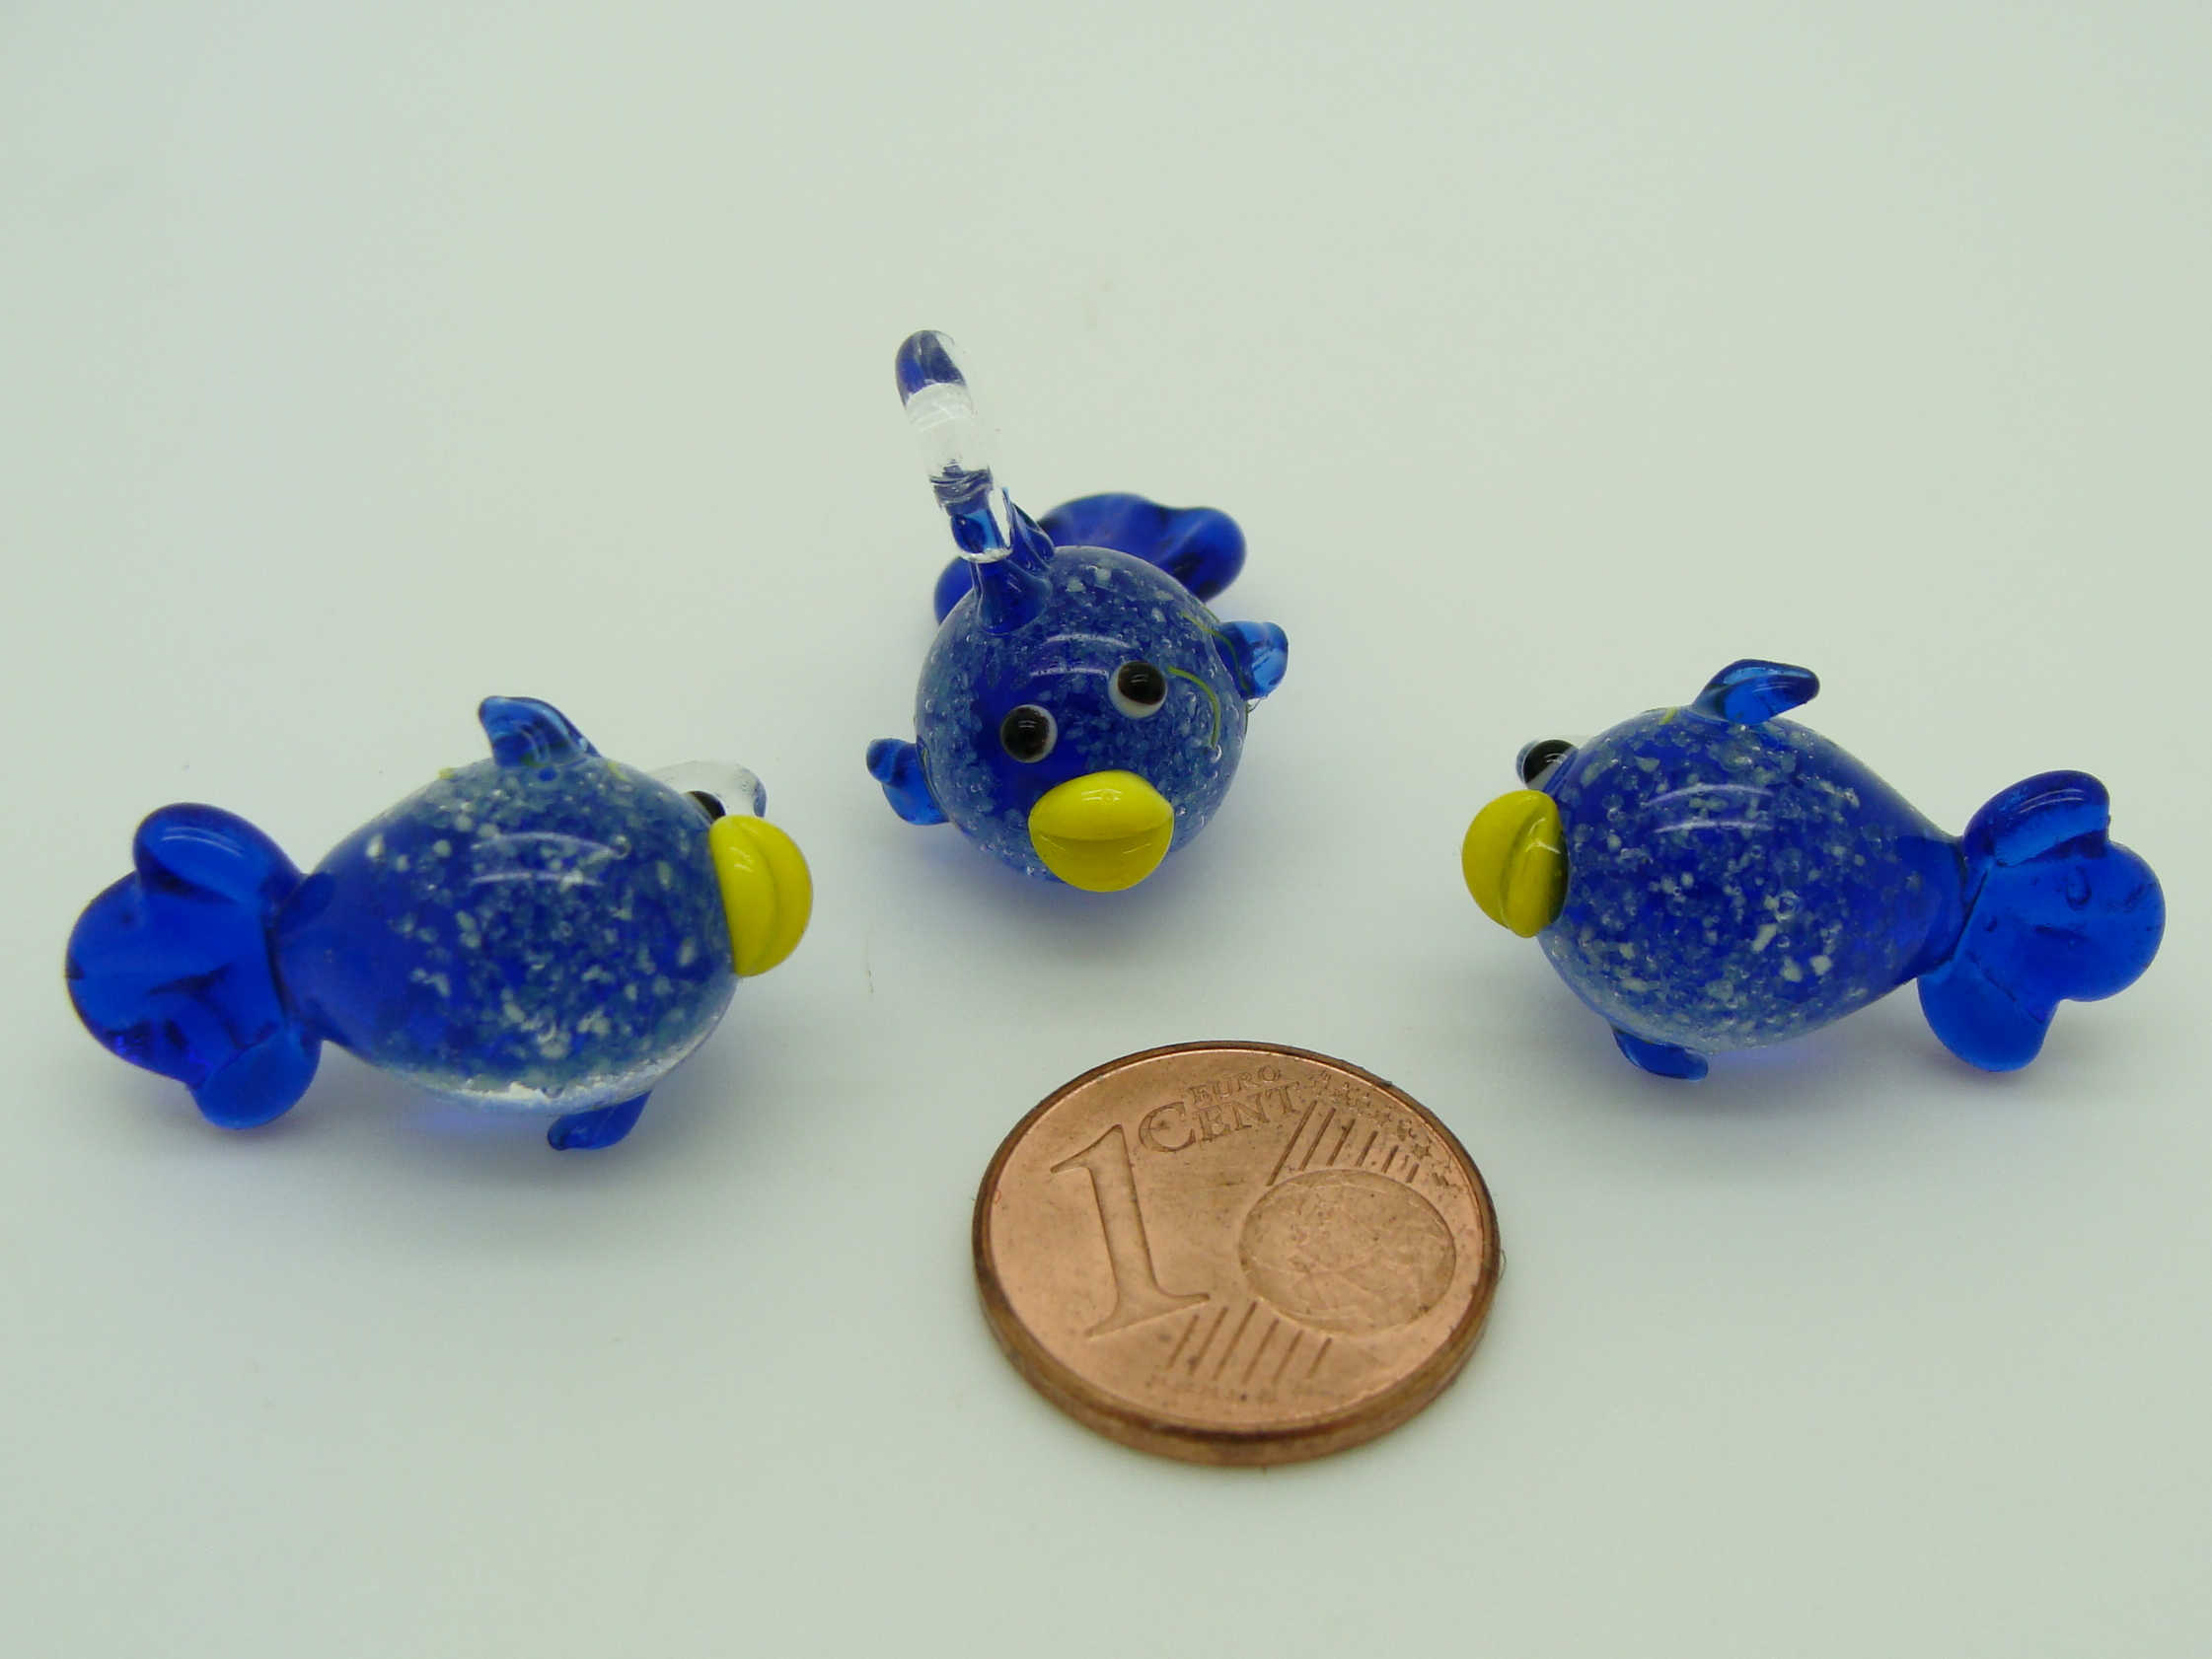 Pend-314-2 mini pendentif poisson bleu fonce verre